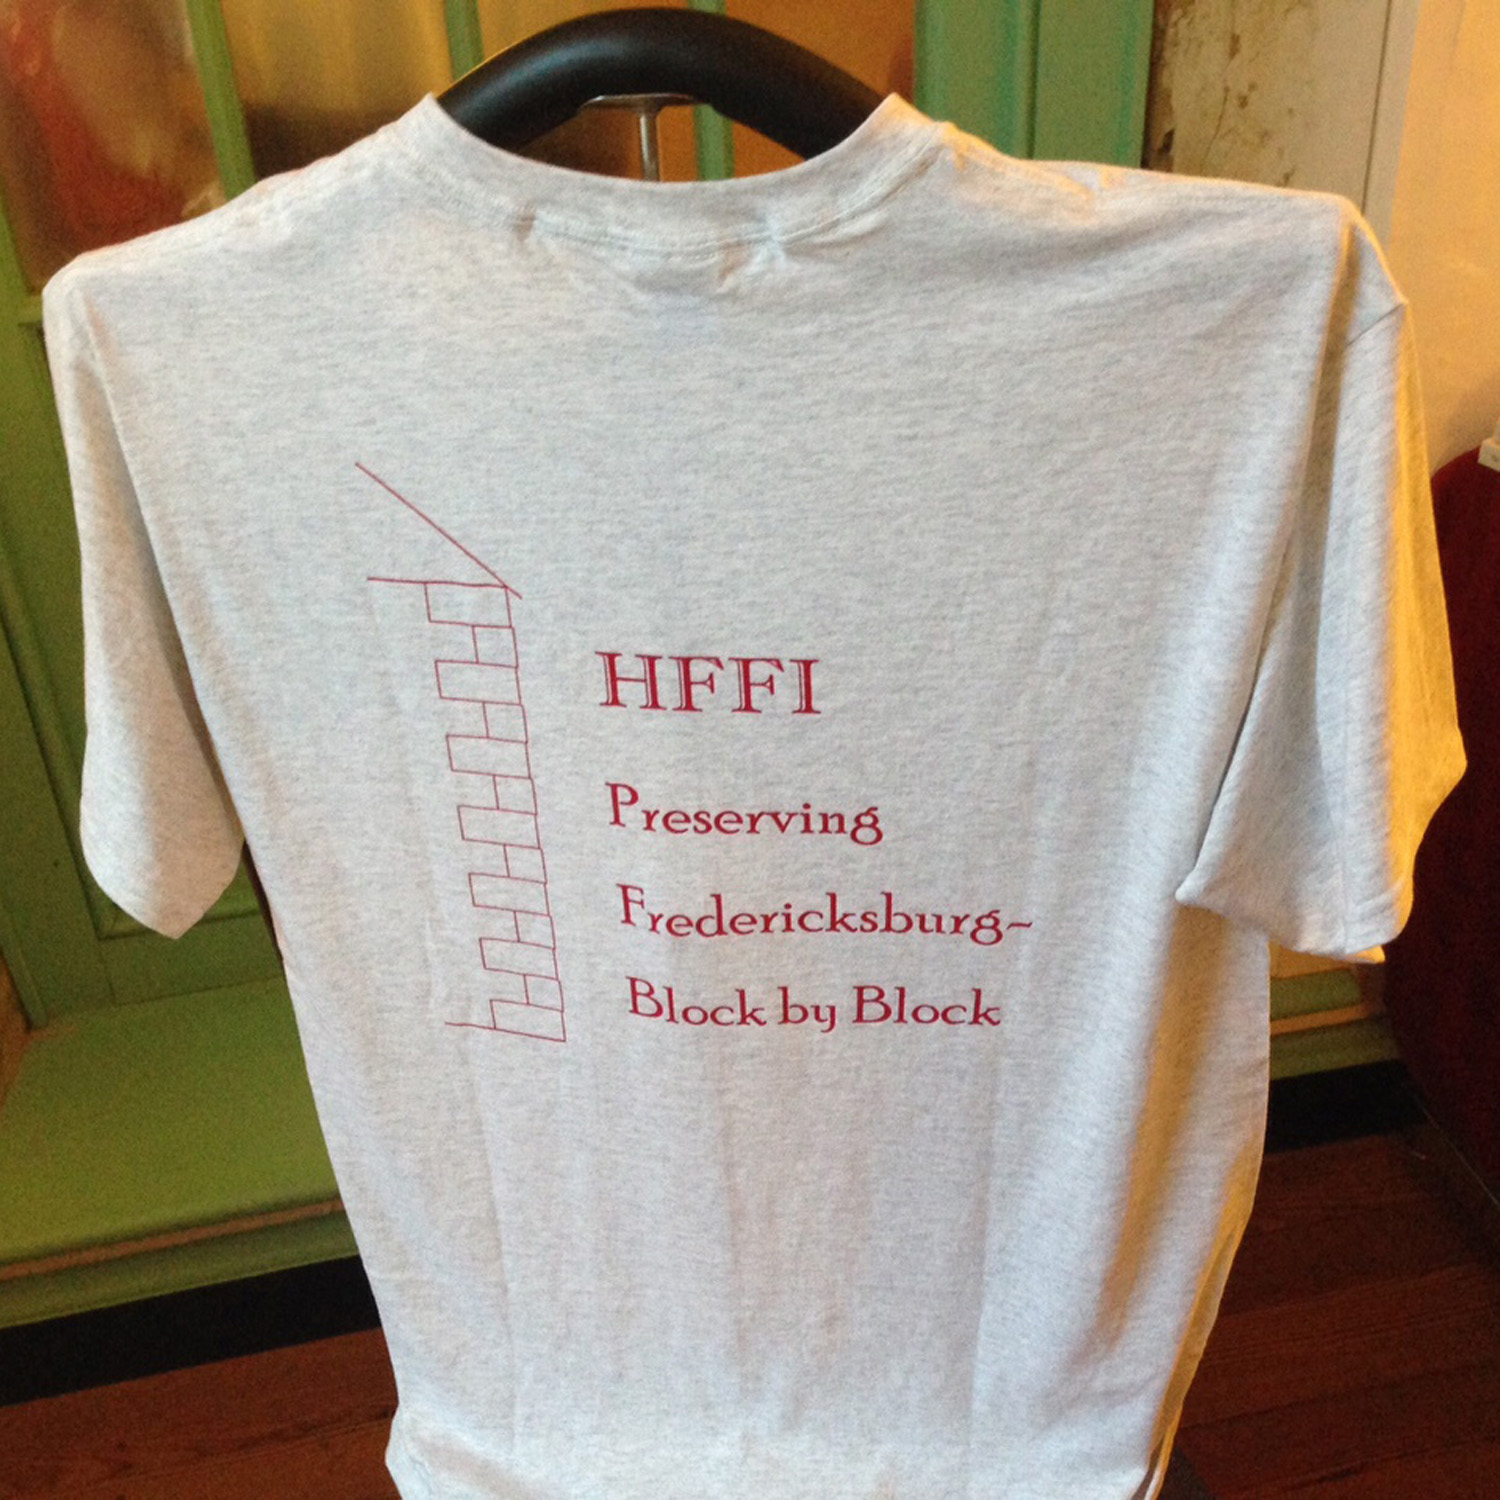 HFFI T-Shirts - Grey